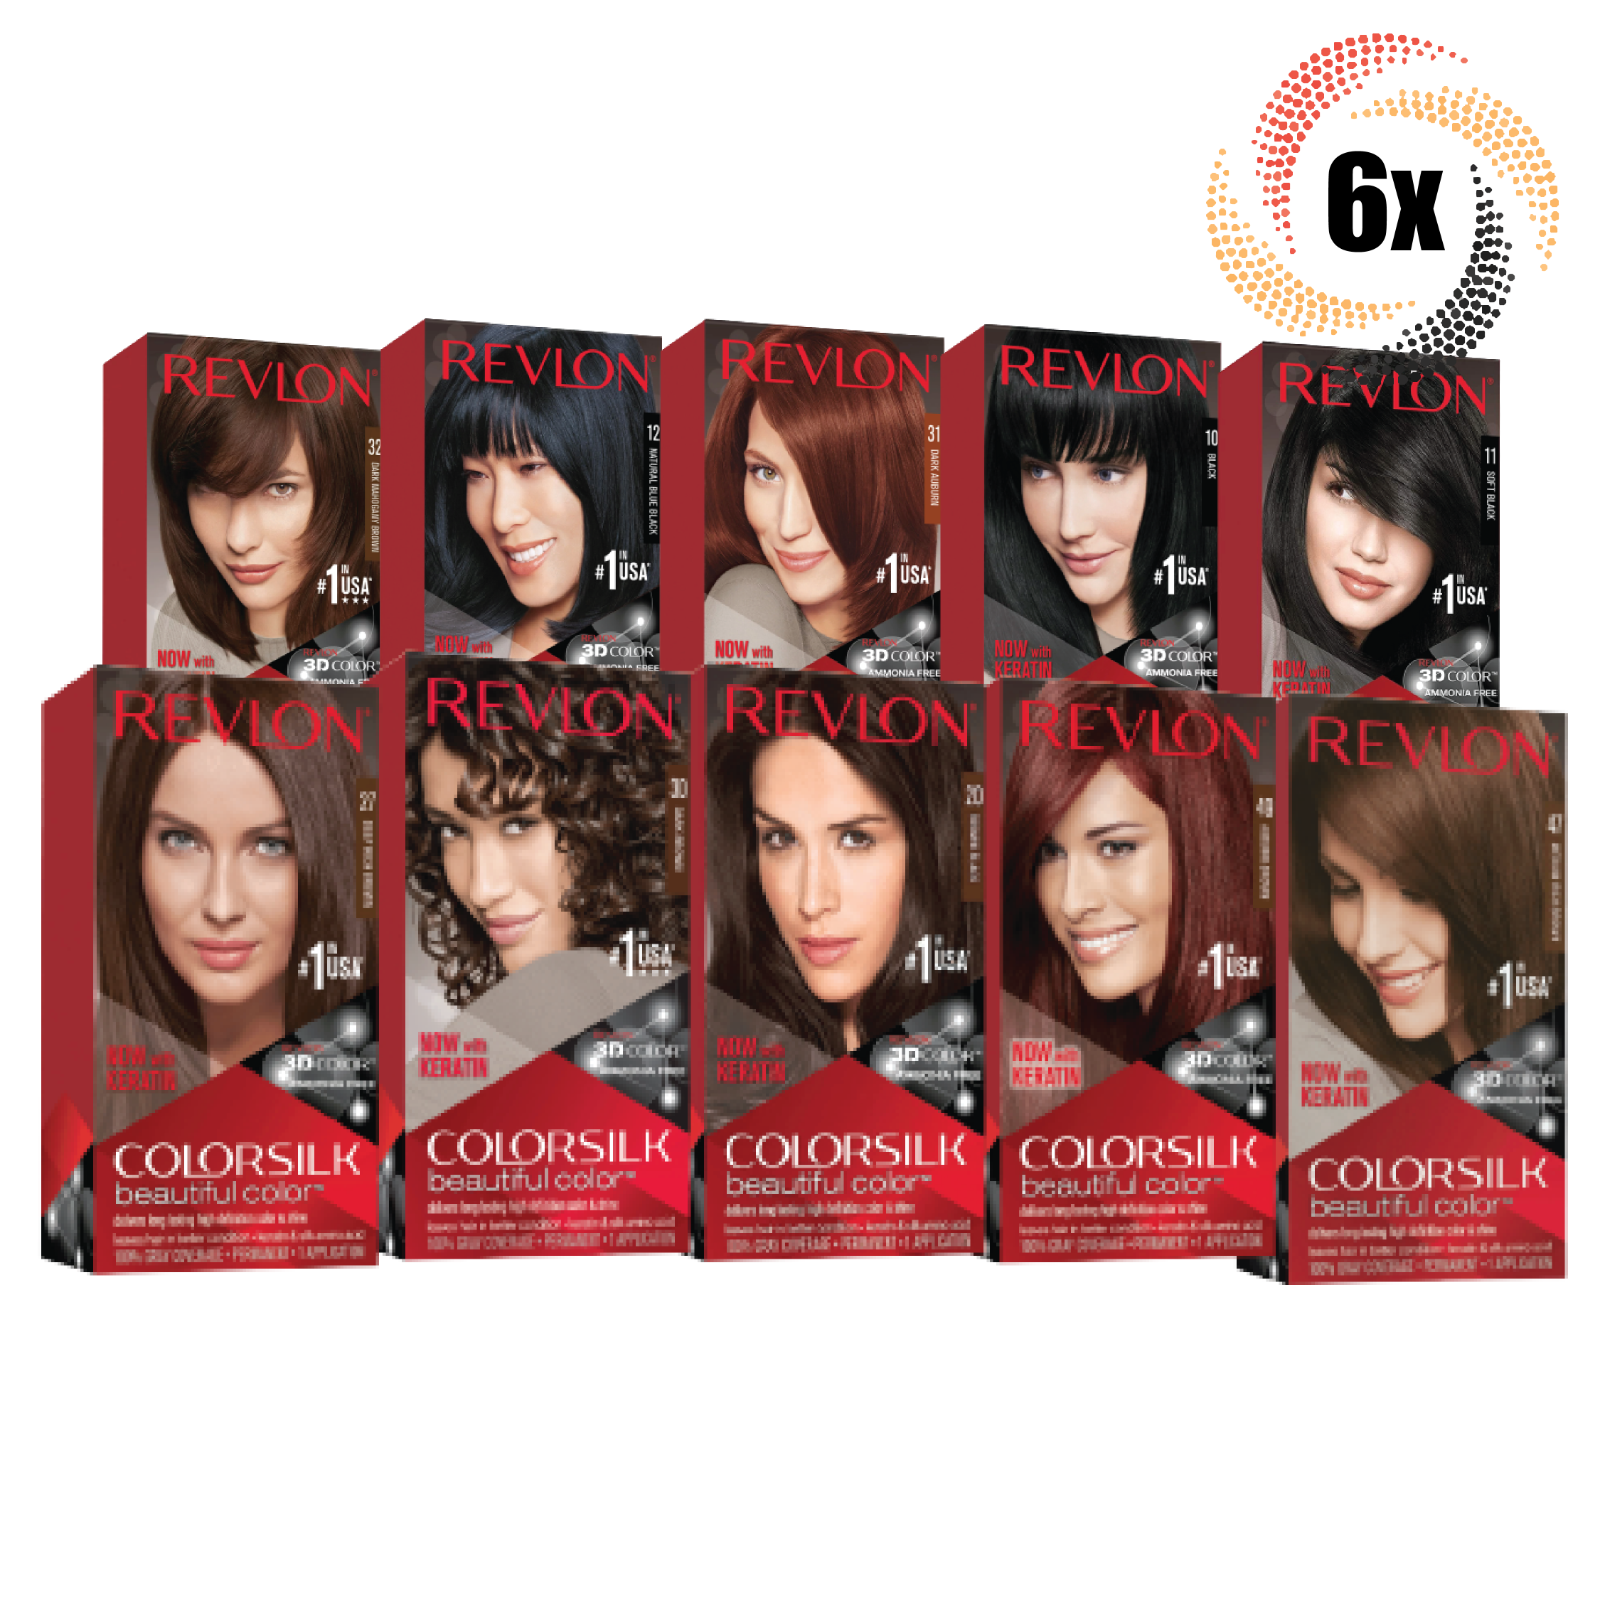 6x Packs Revlon Variety Permanent Colorsilk Beautiful Color Dye | Mix & Match! - $38.47